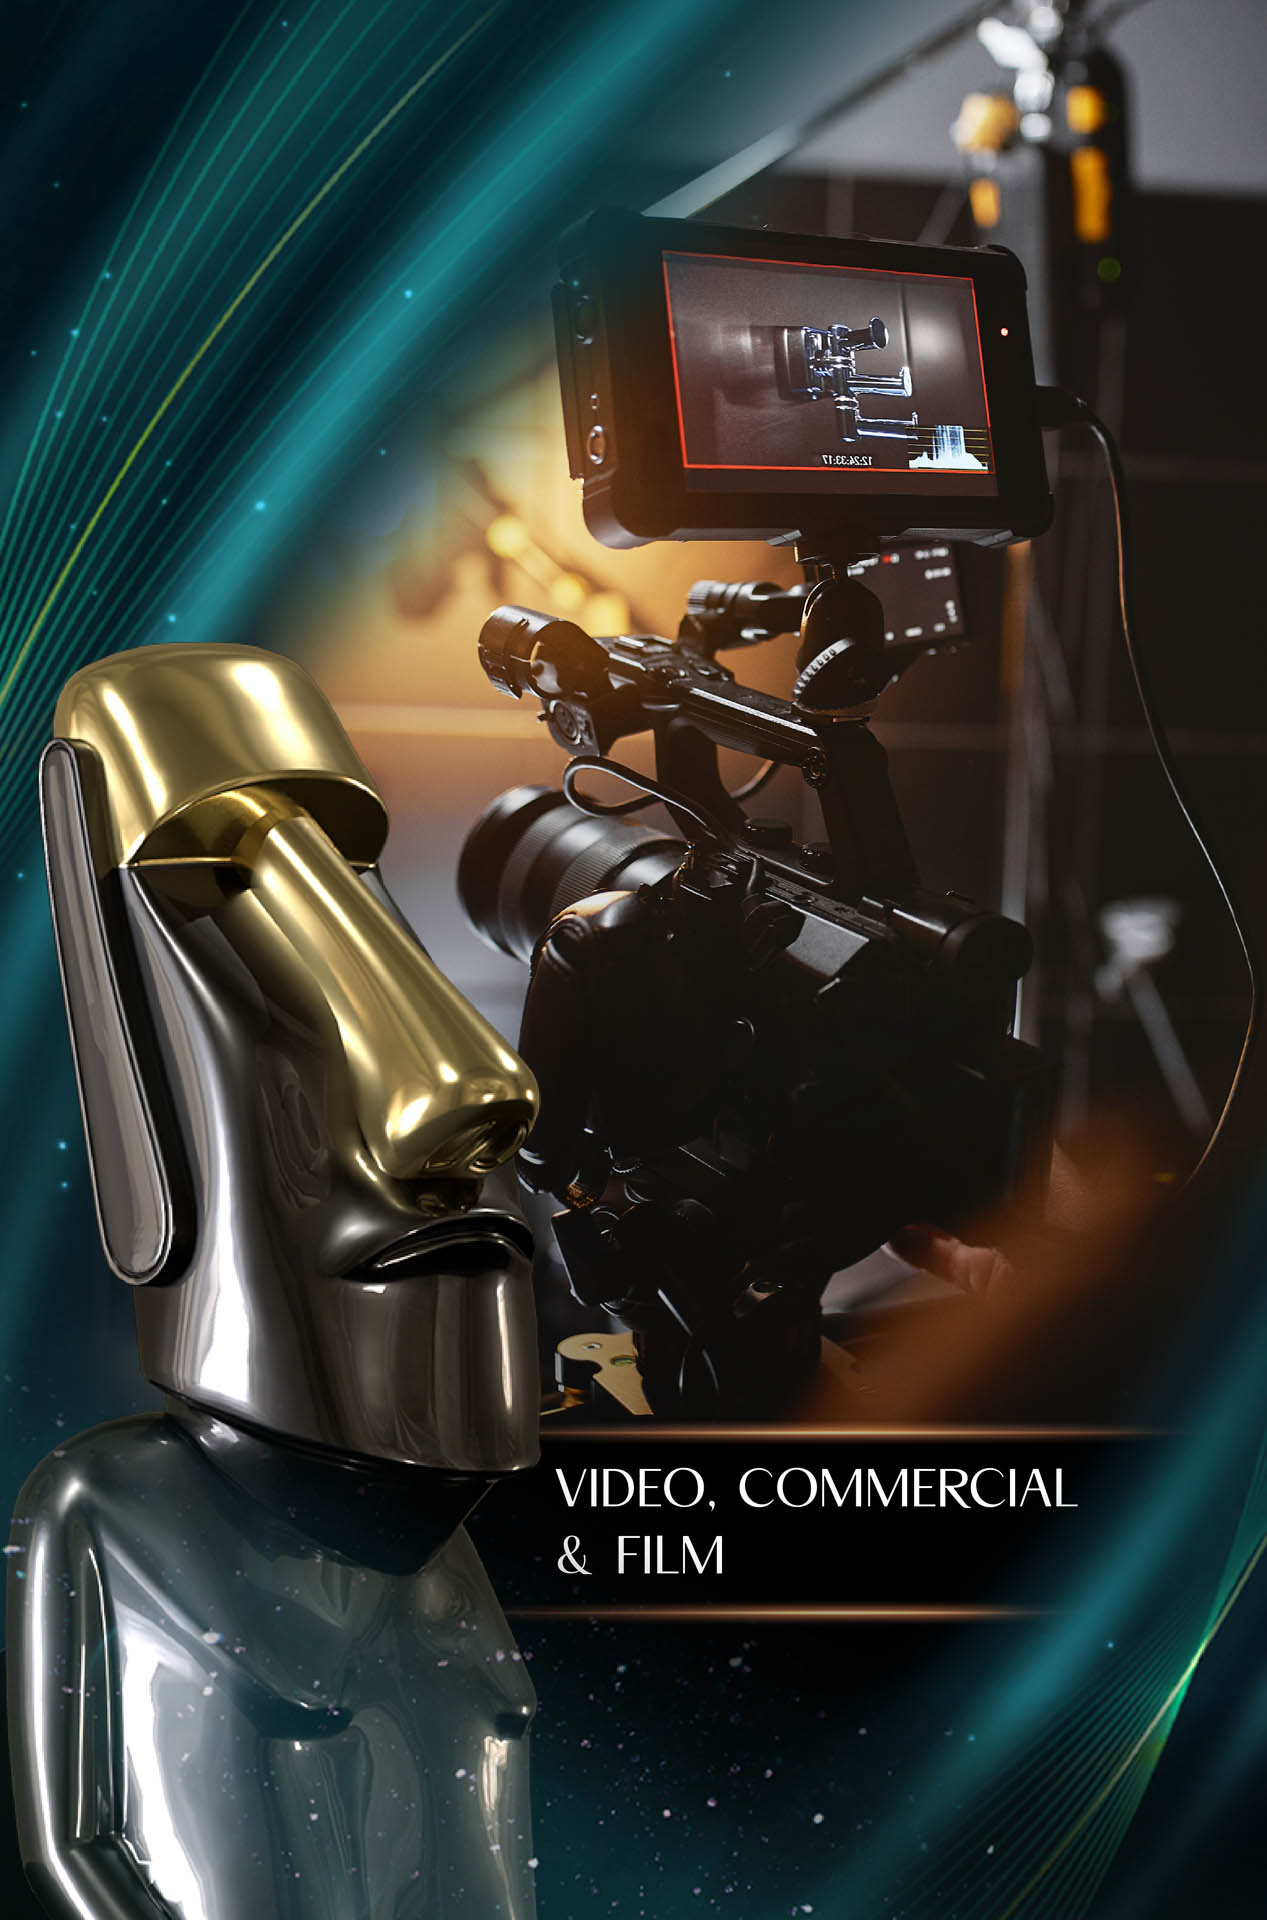 TITAN Video, Commercial & Film